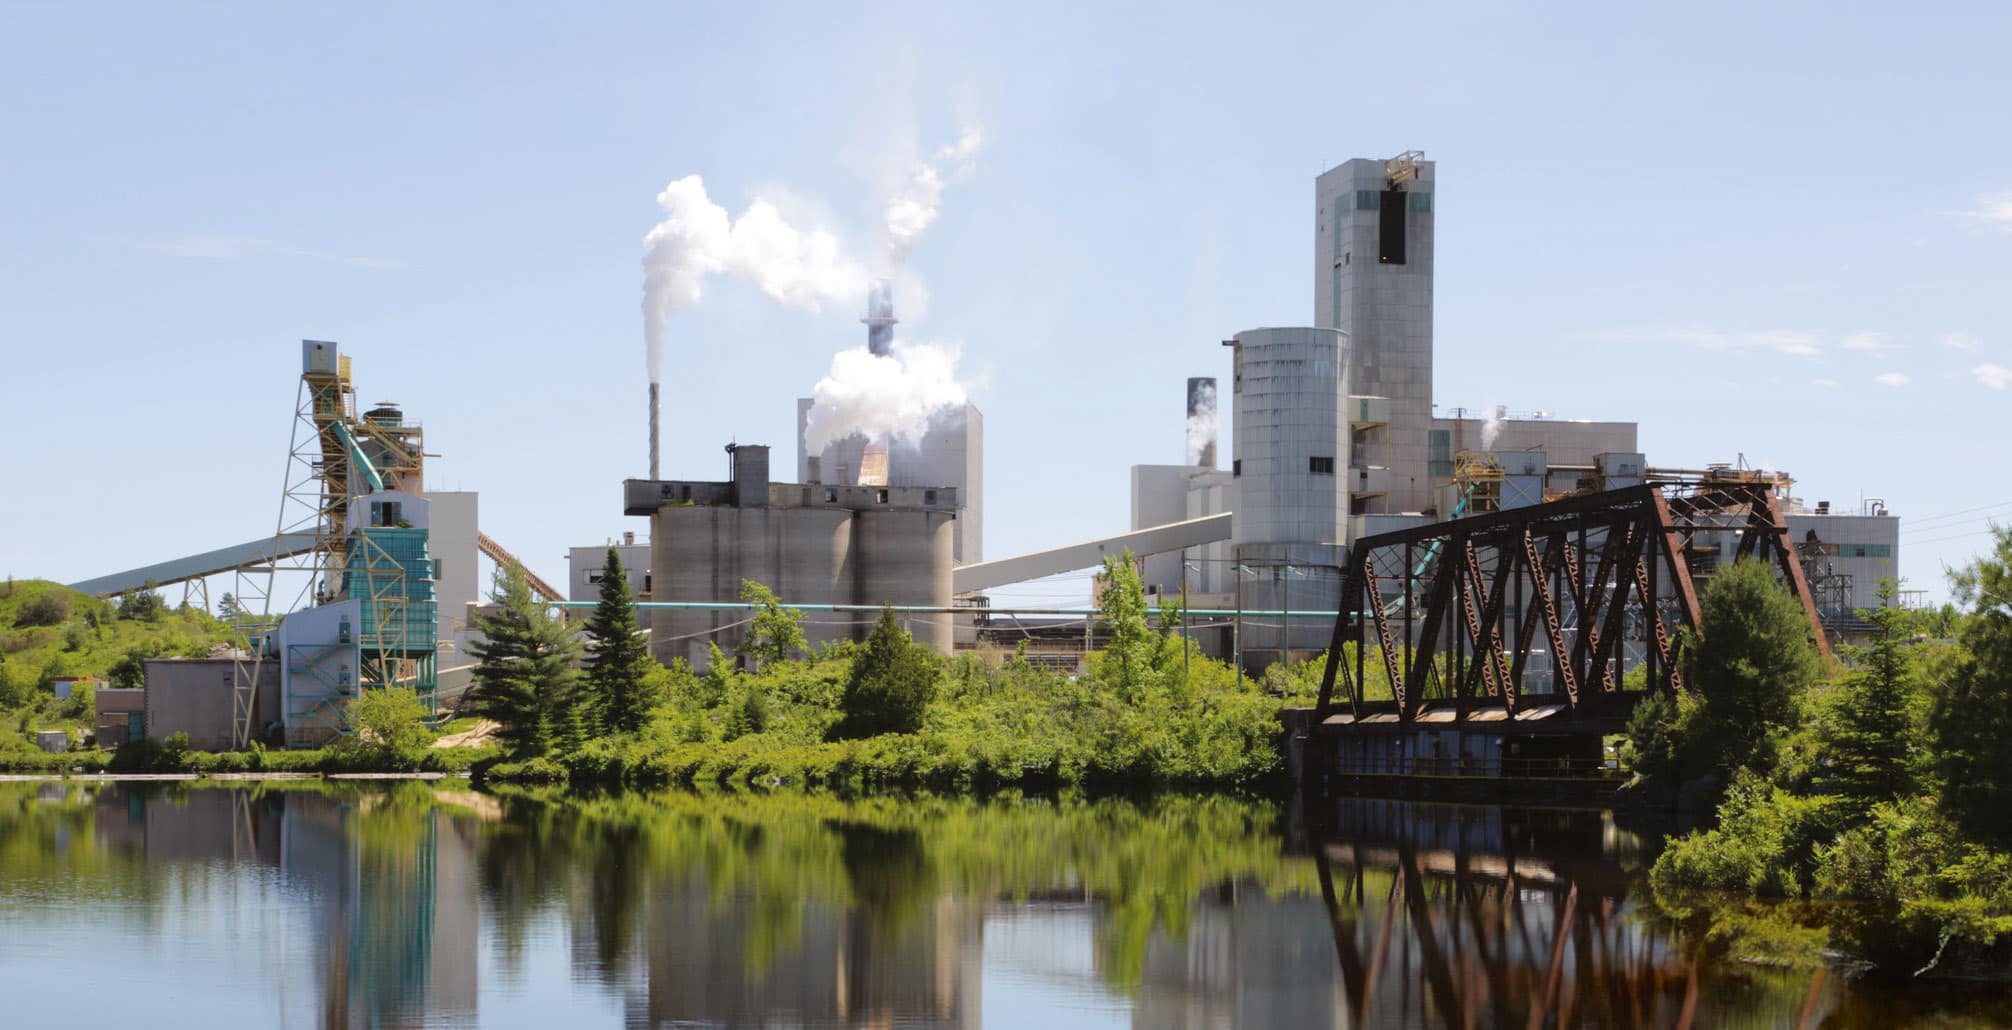 Domtar’s Espanola
pulp & paper mill
in Ontario, Canada.